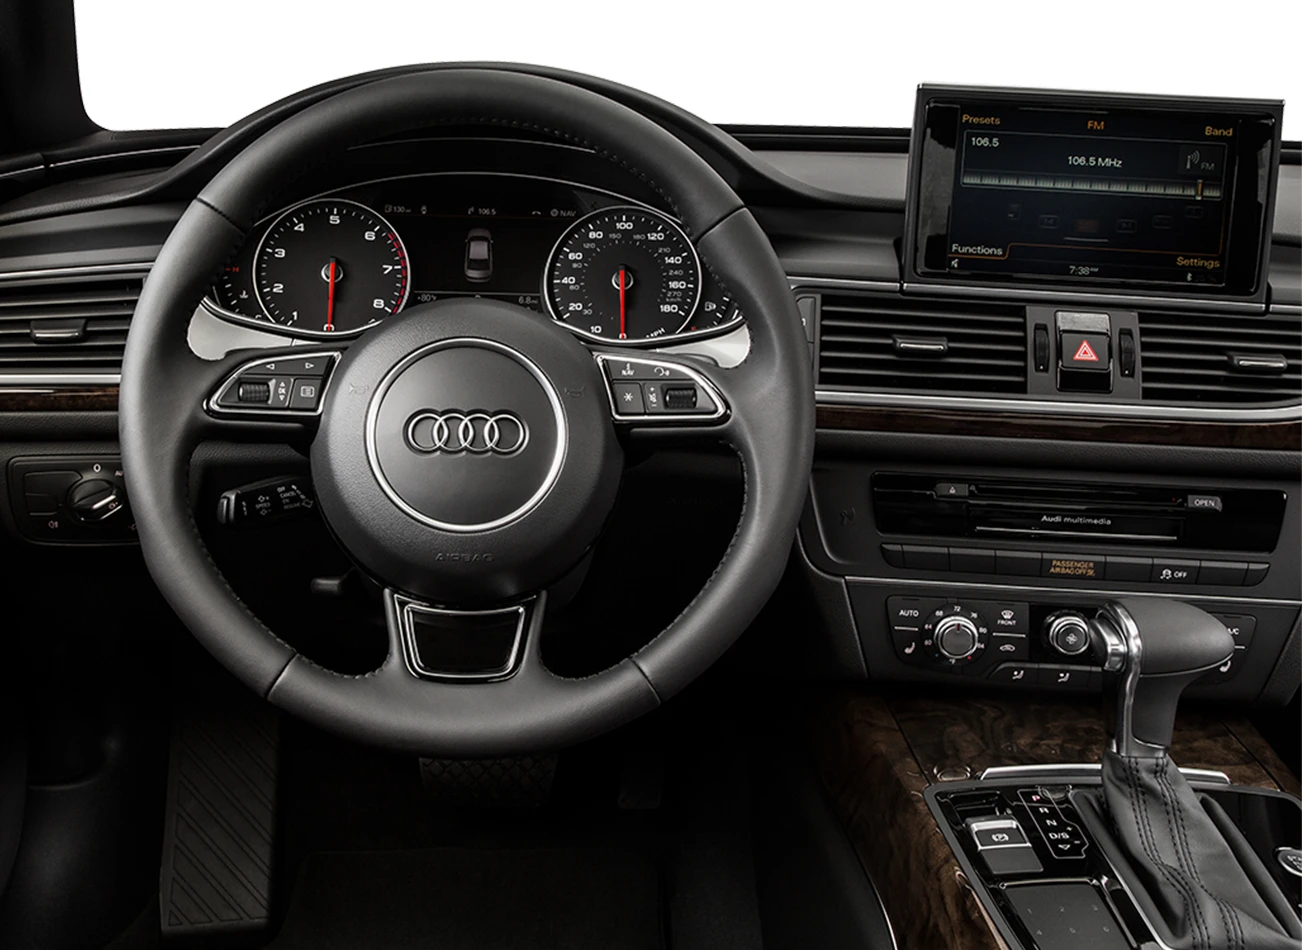 2015 Audi A6 Review: Dashboard | CarMax